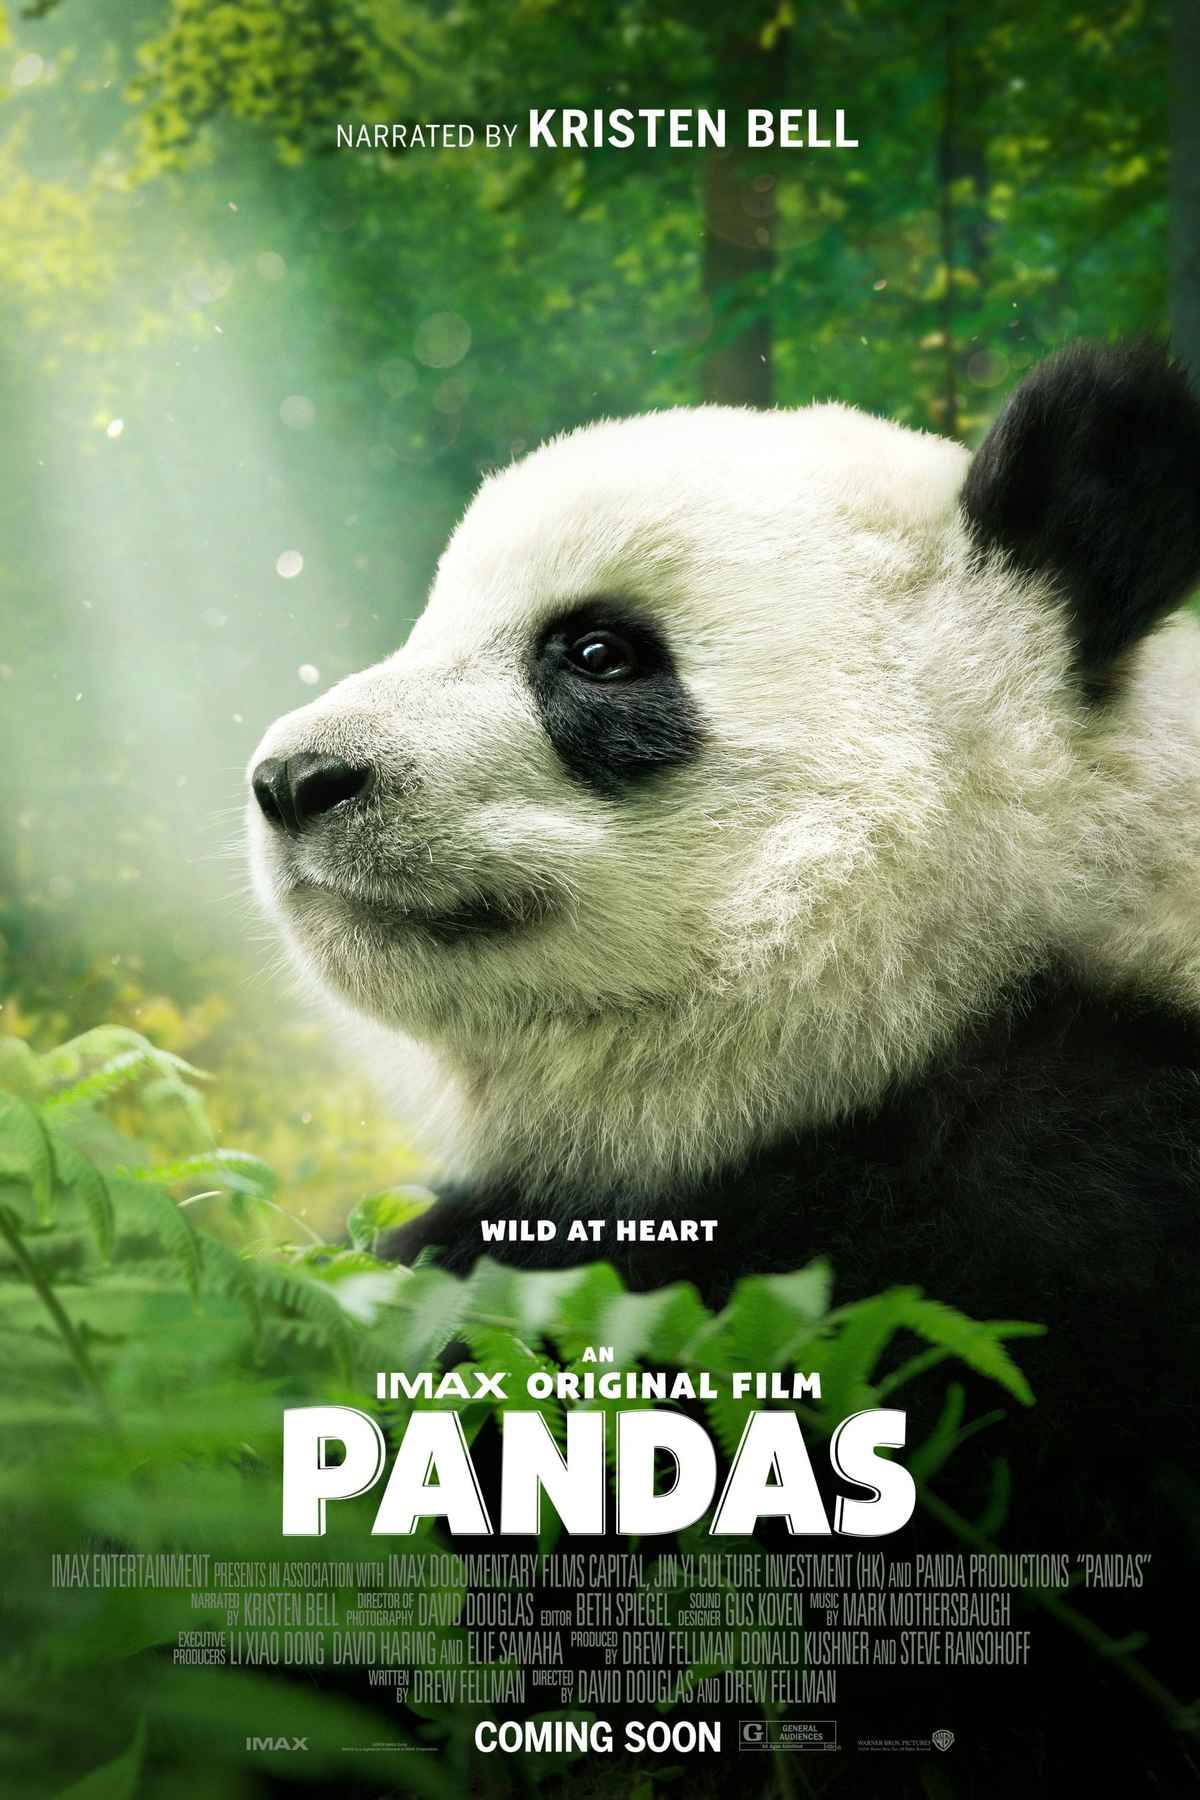 Pandas: The Journey Home